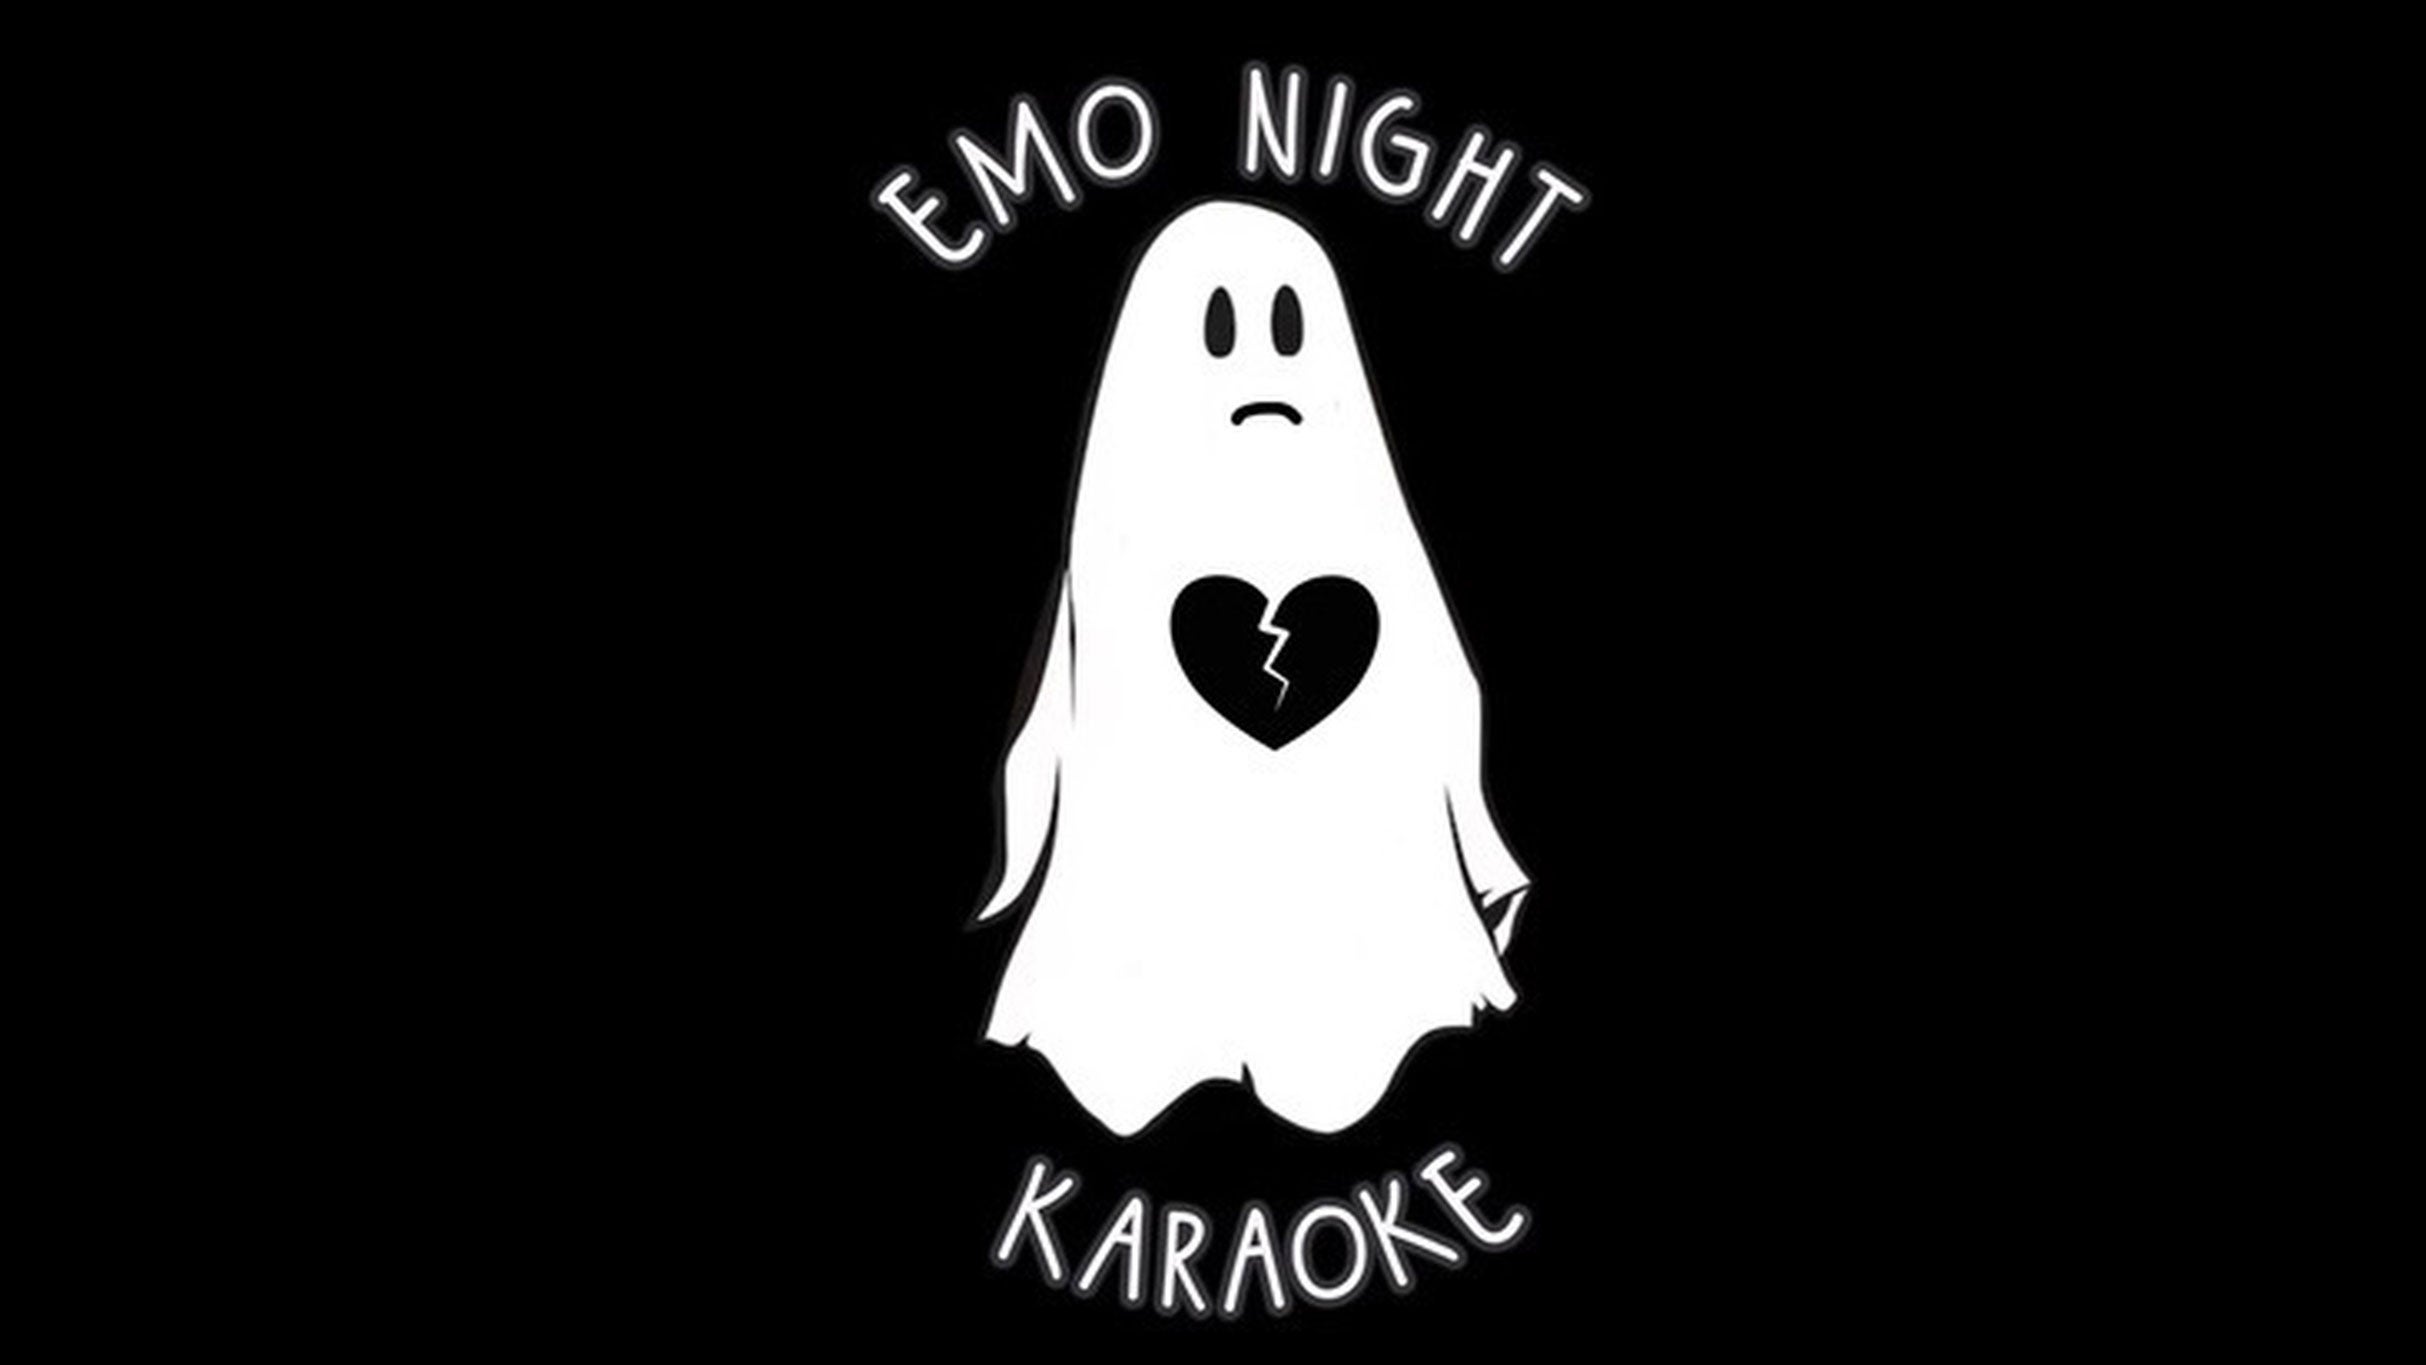 Emo Night Karaoke (21+) at Brooklyn Bowl Philadelphia